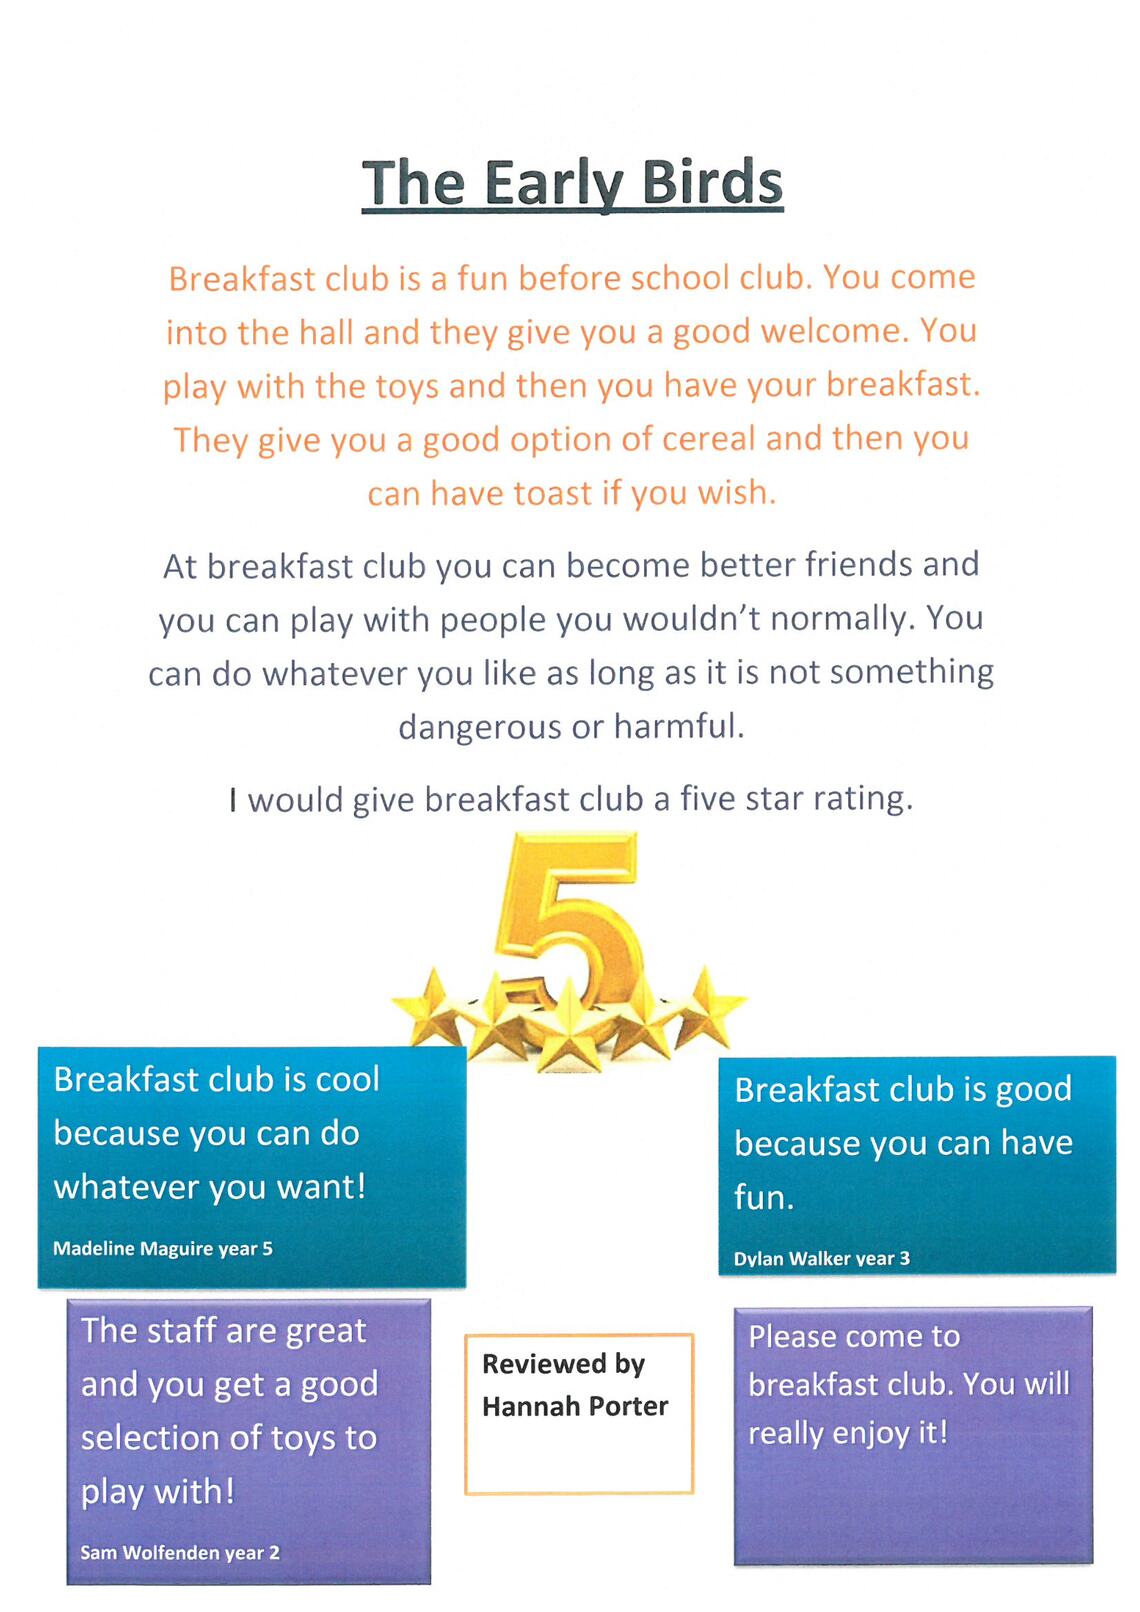 Breakfast club review 2018